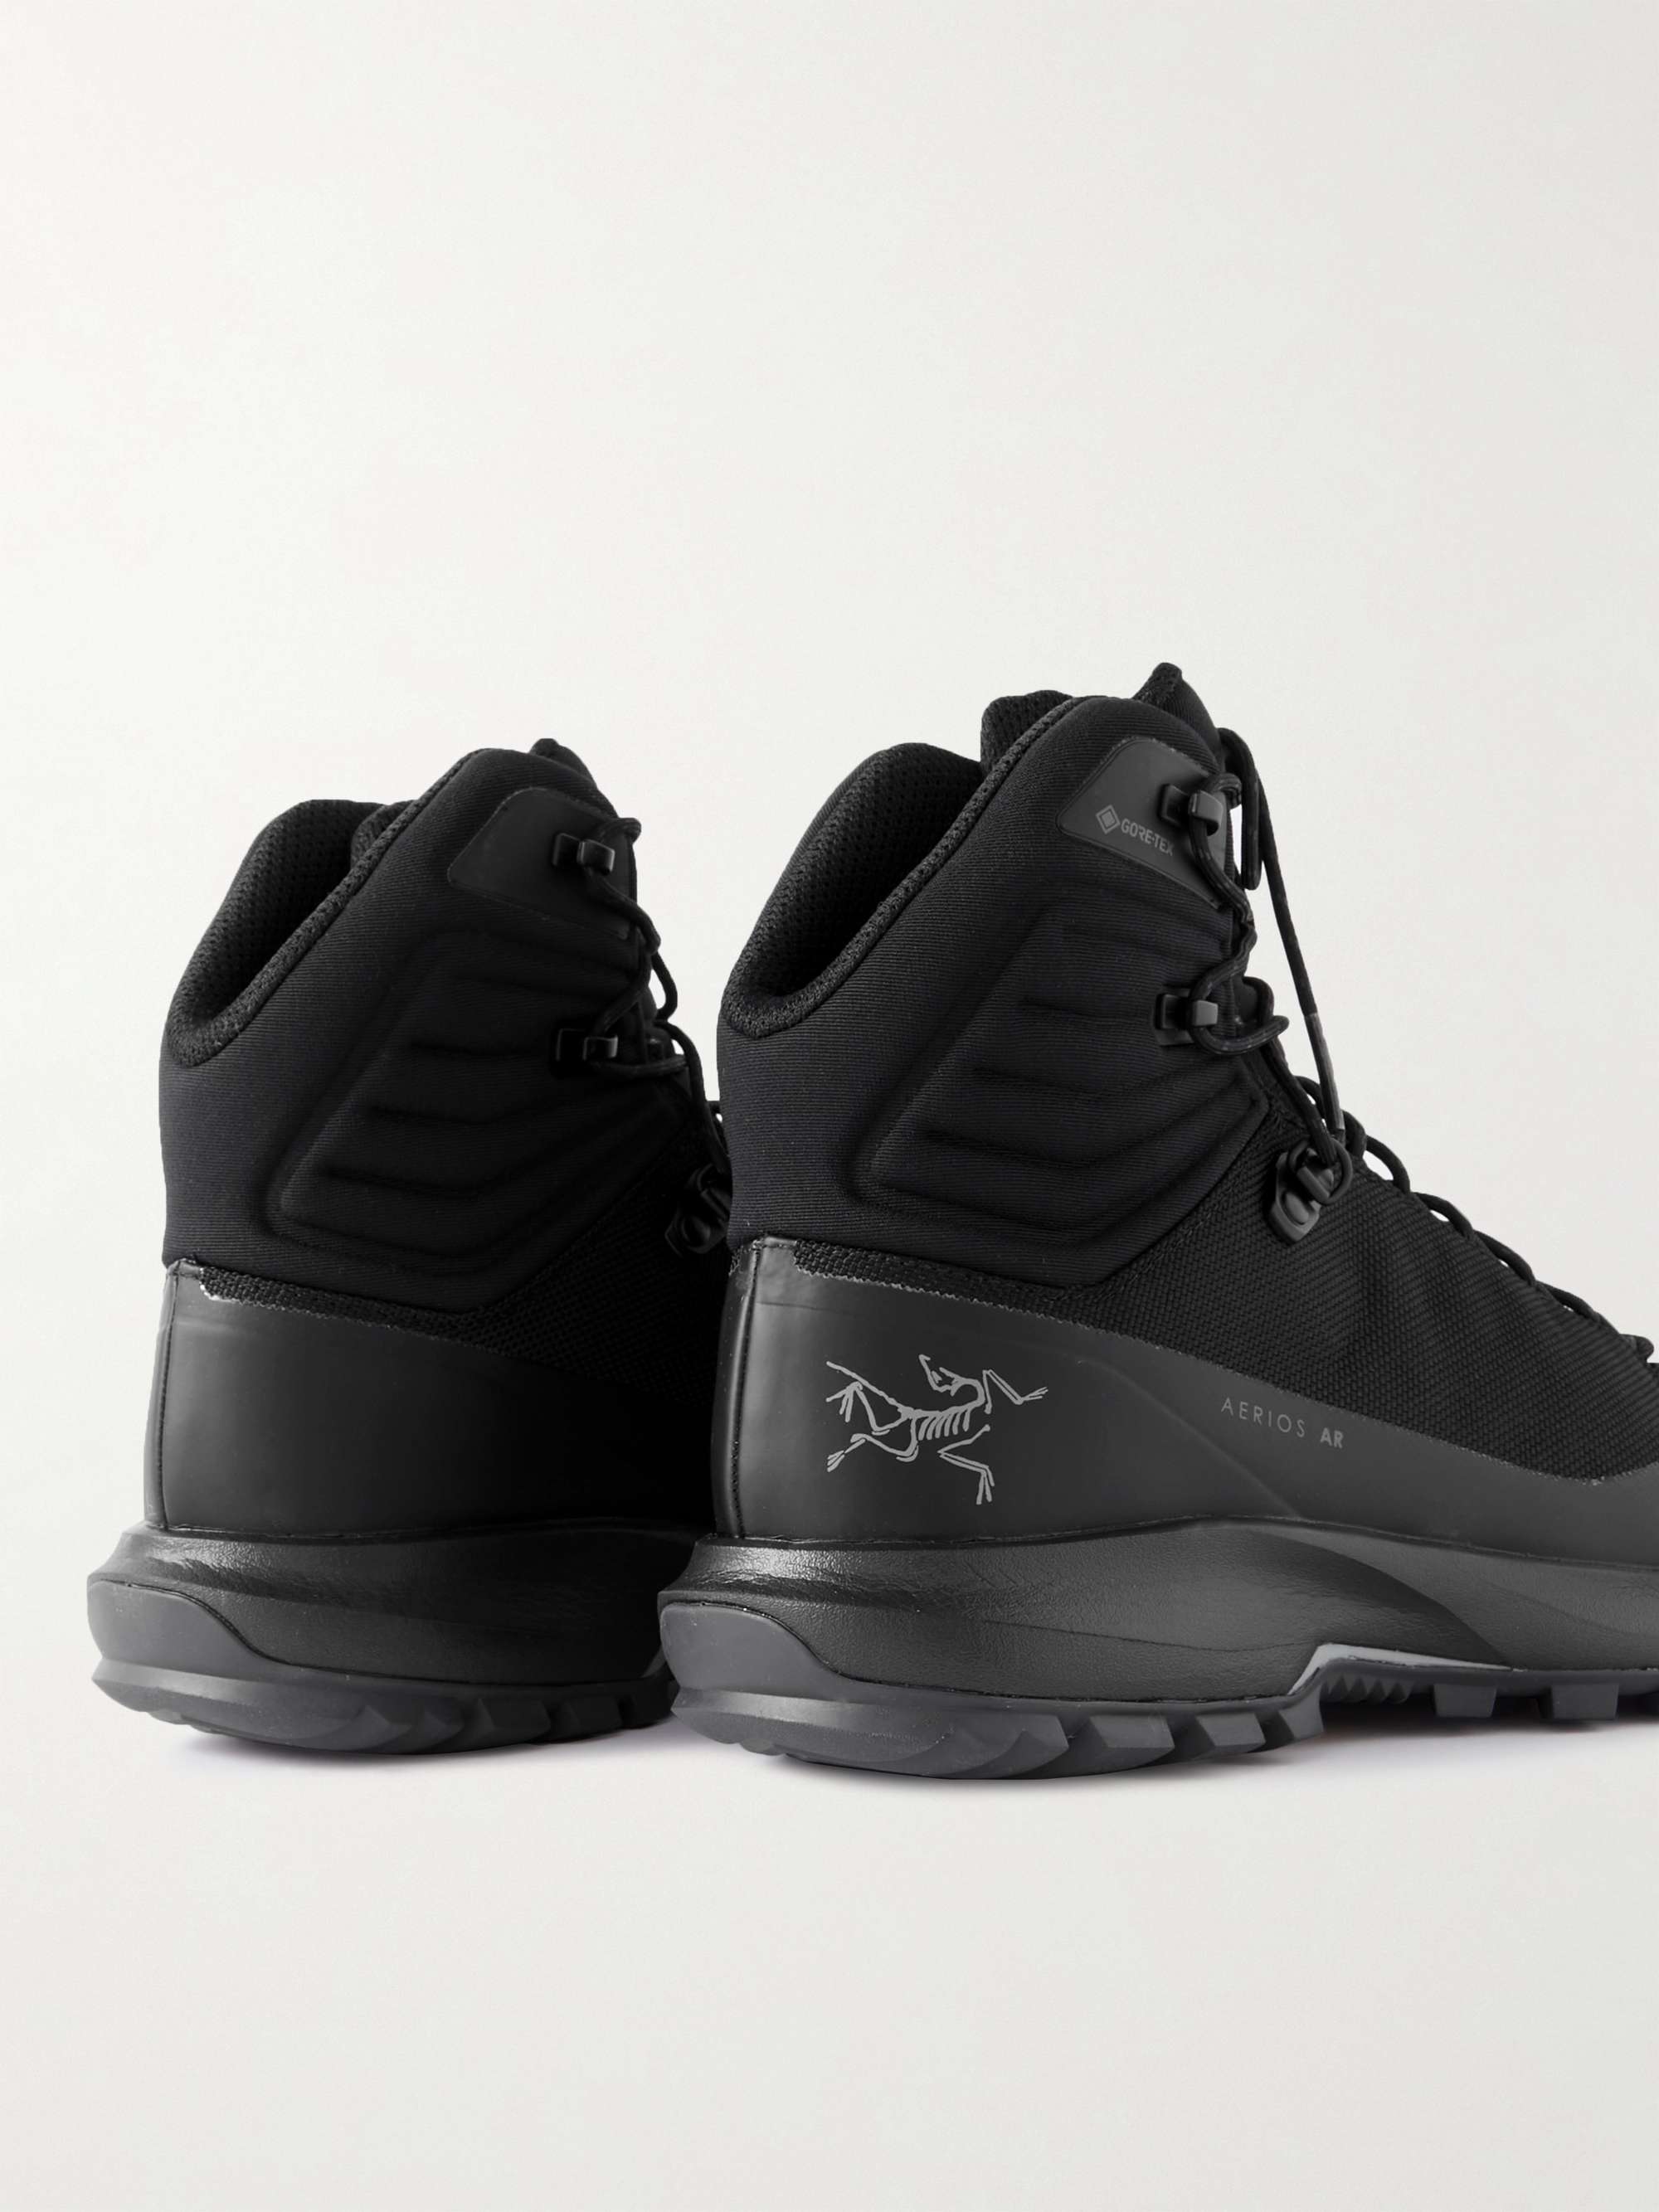 ARC'TERYX Aerios AR Mid GTX Rubber-Trimmed GORE-TEX Hiking Boots